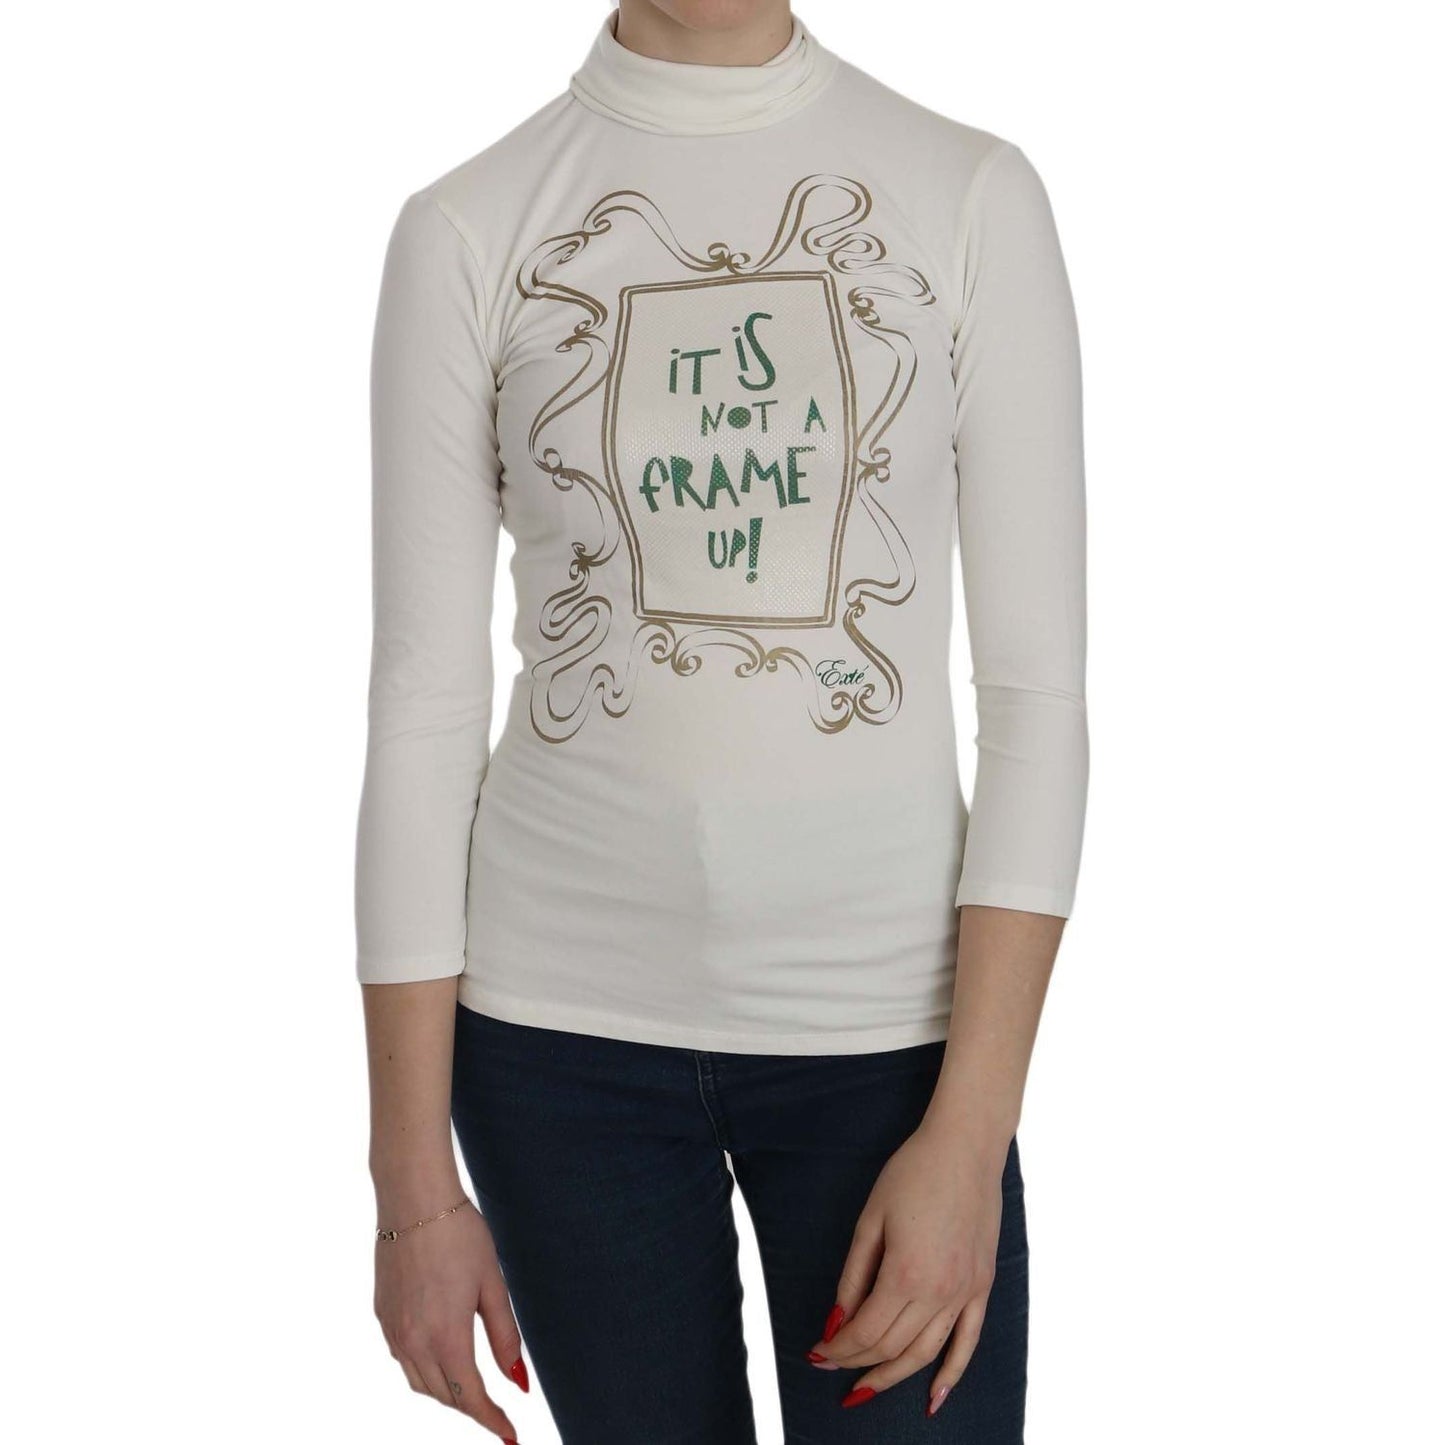 Exte Chic White Printed Turtle Neck Blouse white-printed-turtle-neck-3-4-sleeve-top-cotton-blouse IMG_2738-f0ff1666-3db.jpg